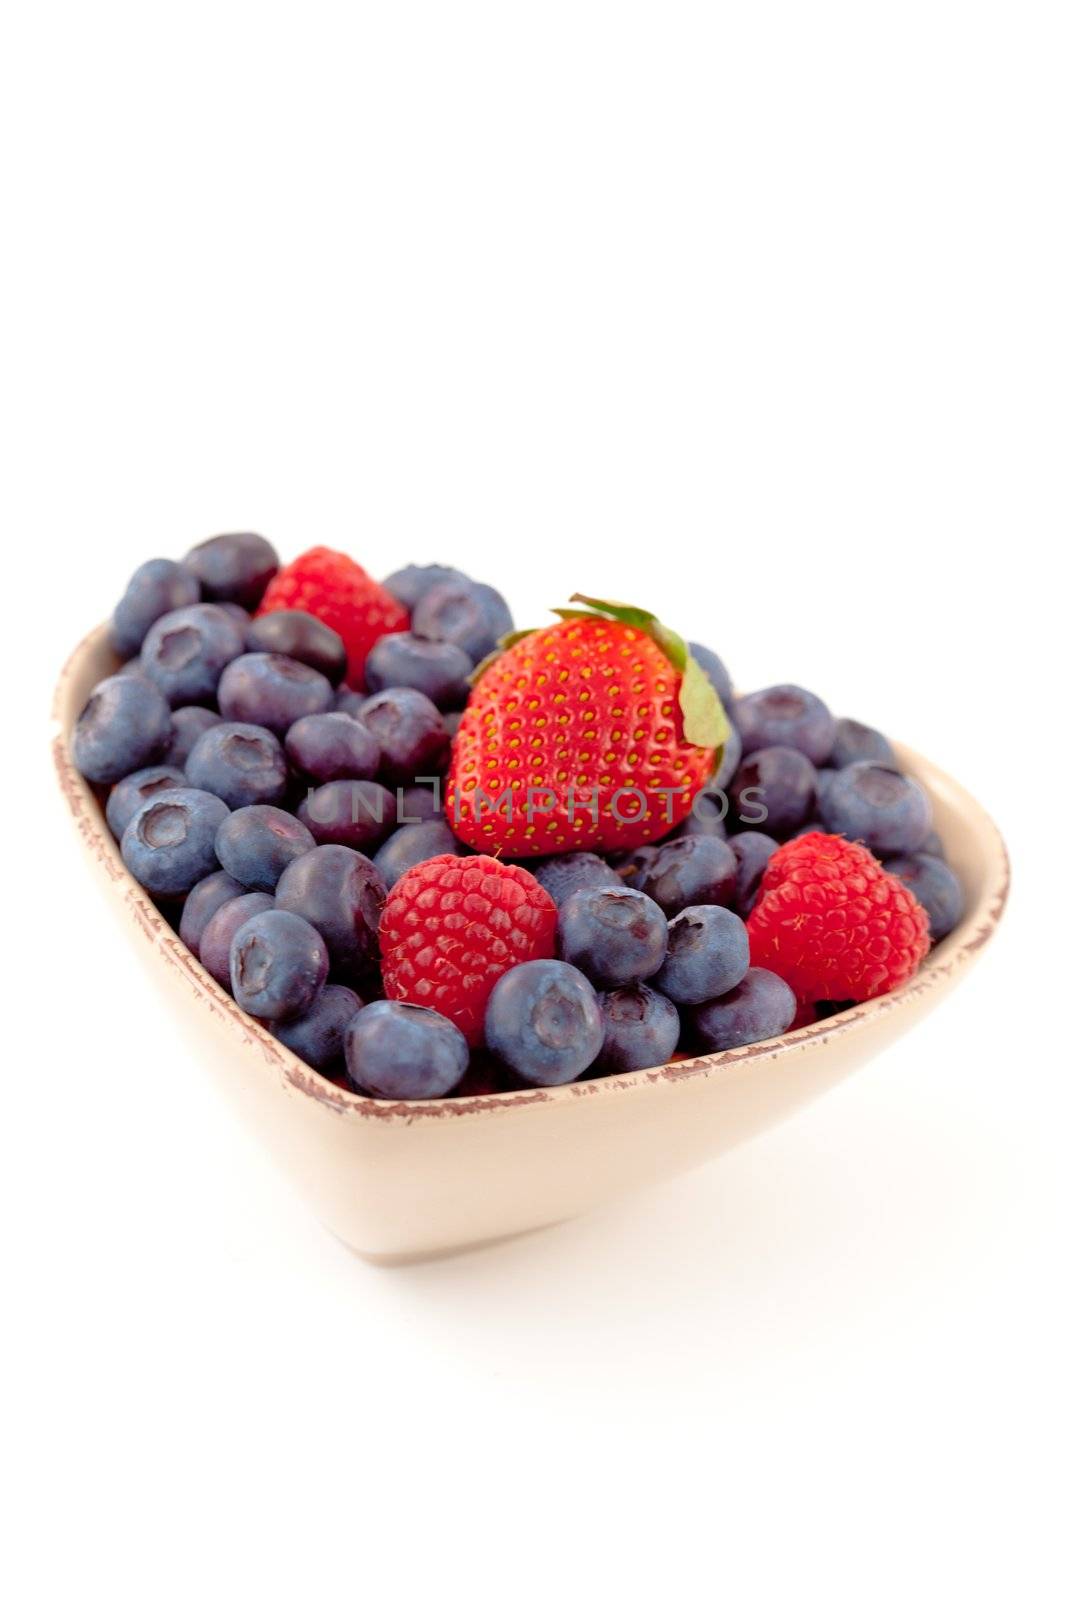 Berries in a heart shaped bowl by Wavebreakmedia